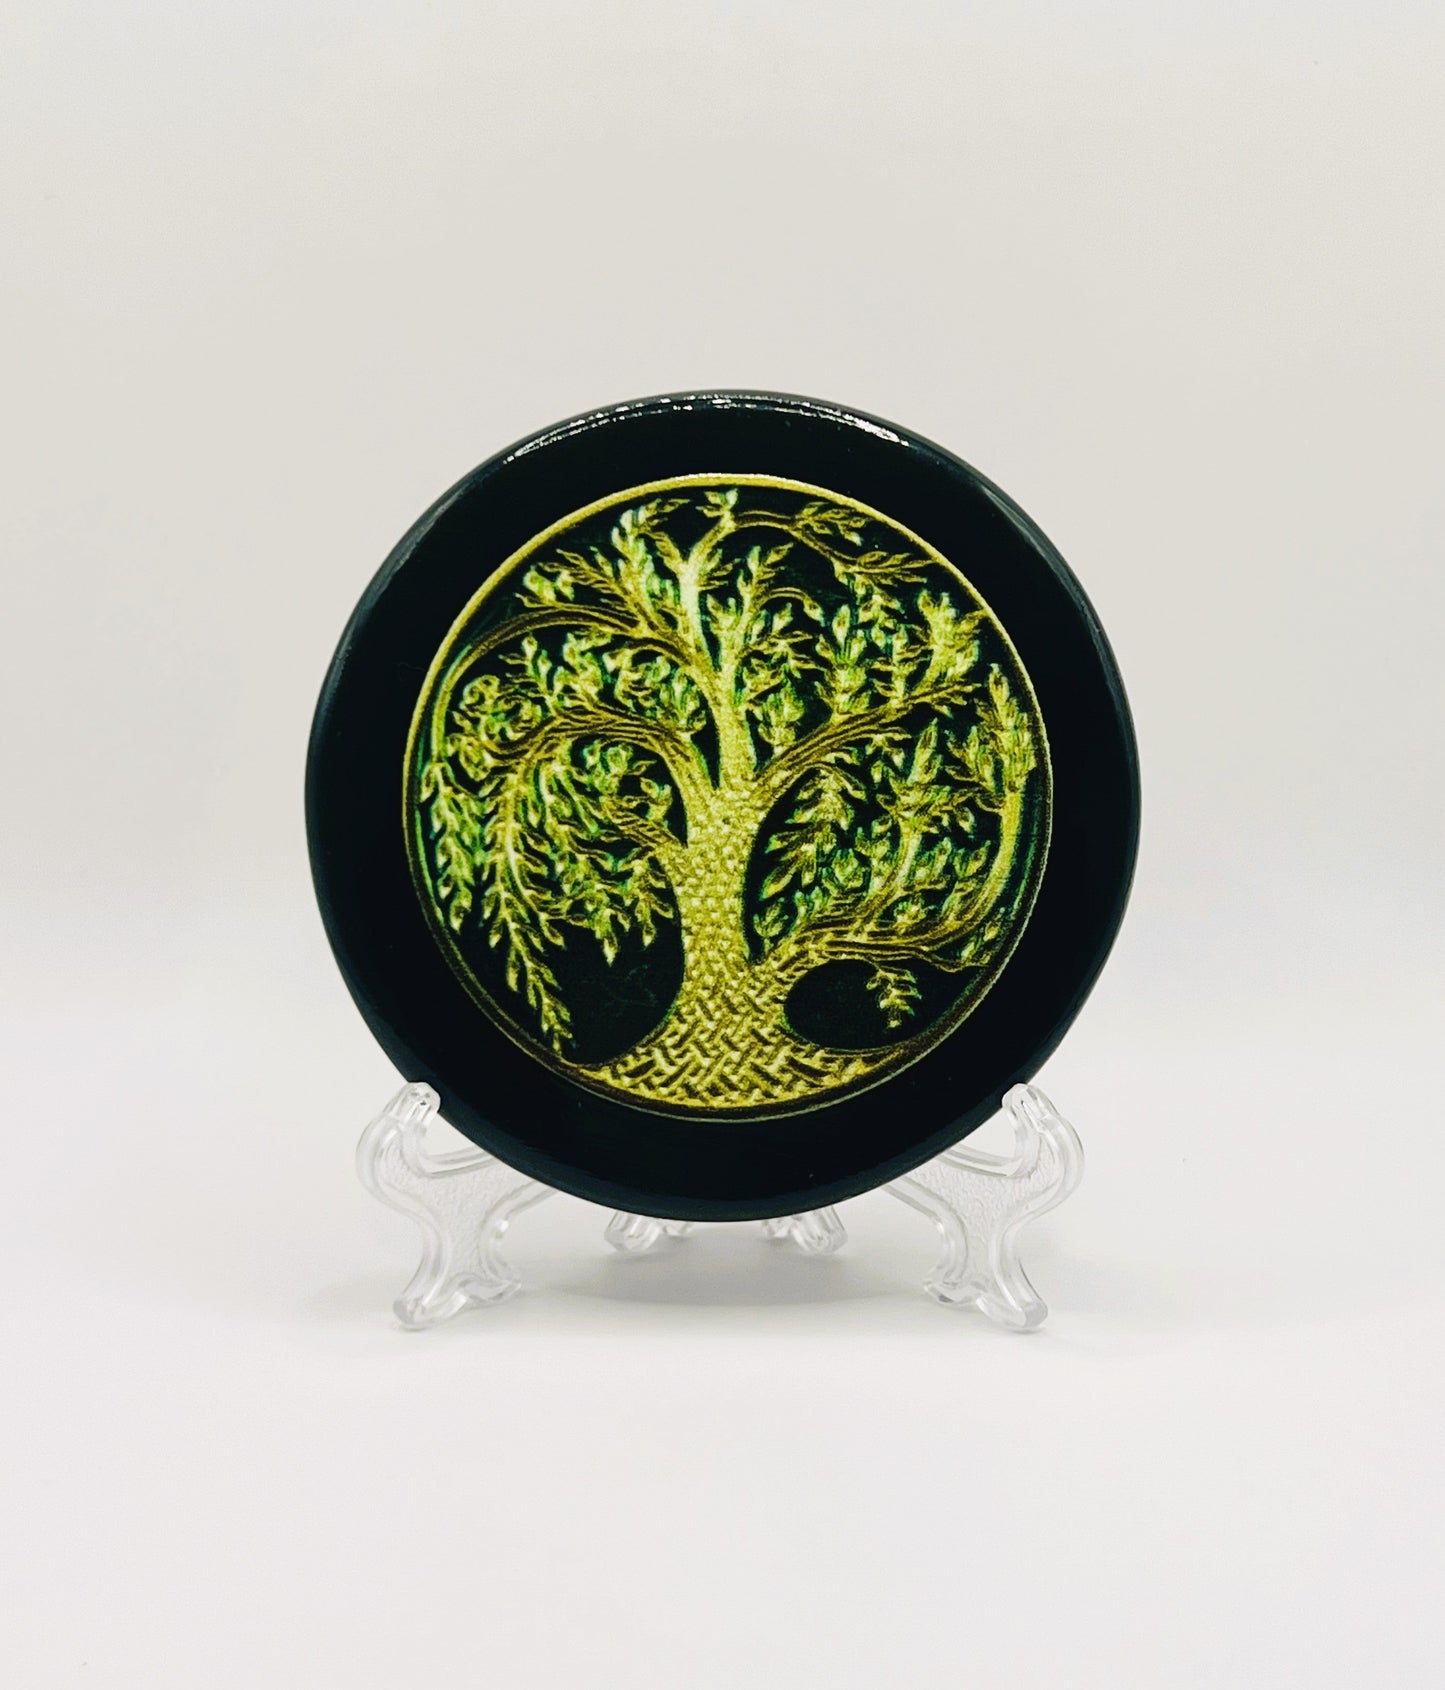 Tree of Life Green - Black Agate Coaster